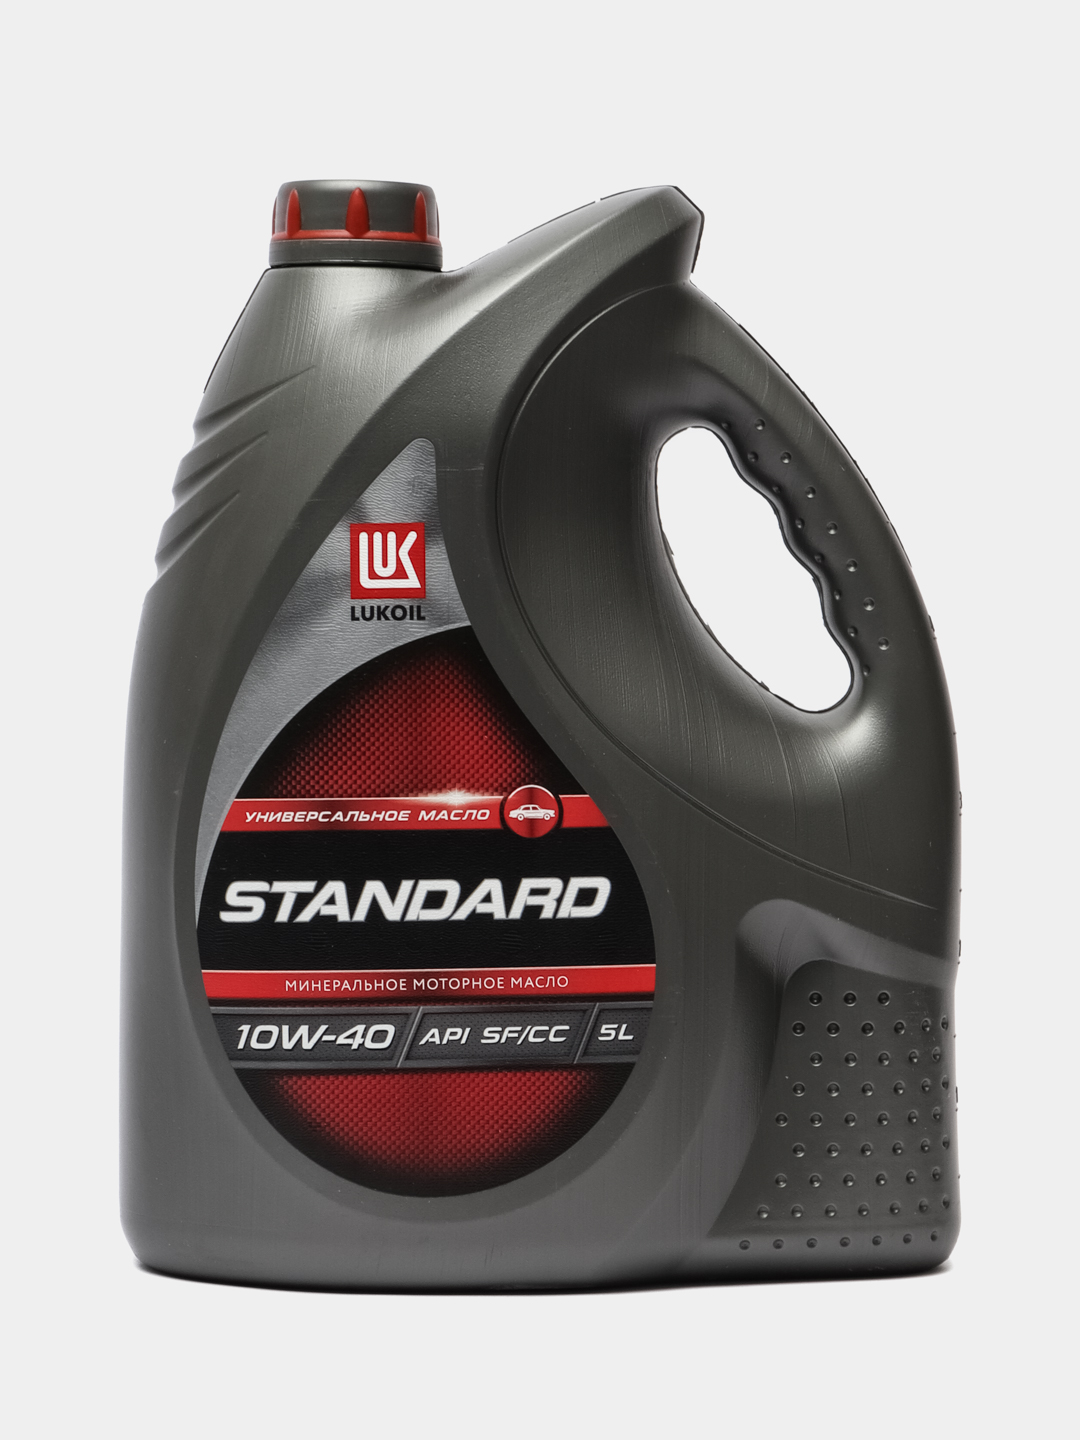 Моторное масло api sf. Lukoil Standard SAE 40, API SF/cc Motor Oil. API SF/cc. Аналог 10w-30 стандарт API SF/cc 4л (мин. мотор. Масло). Масло API SF какое масло.